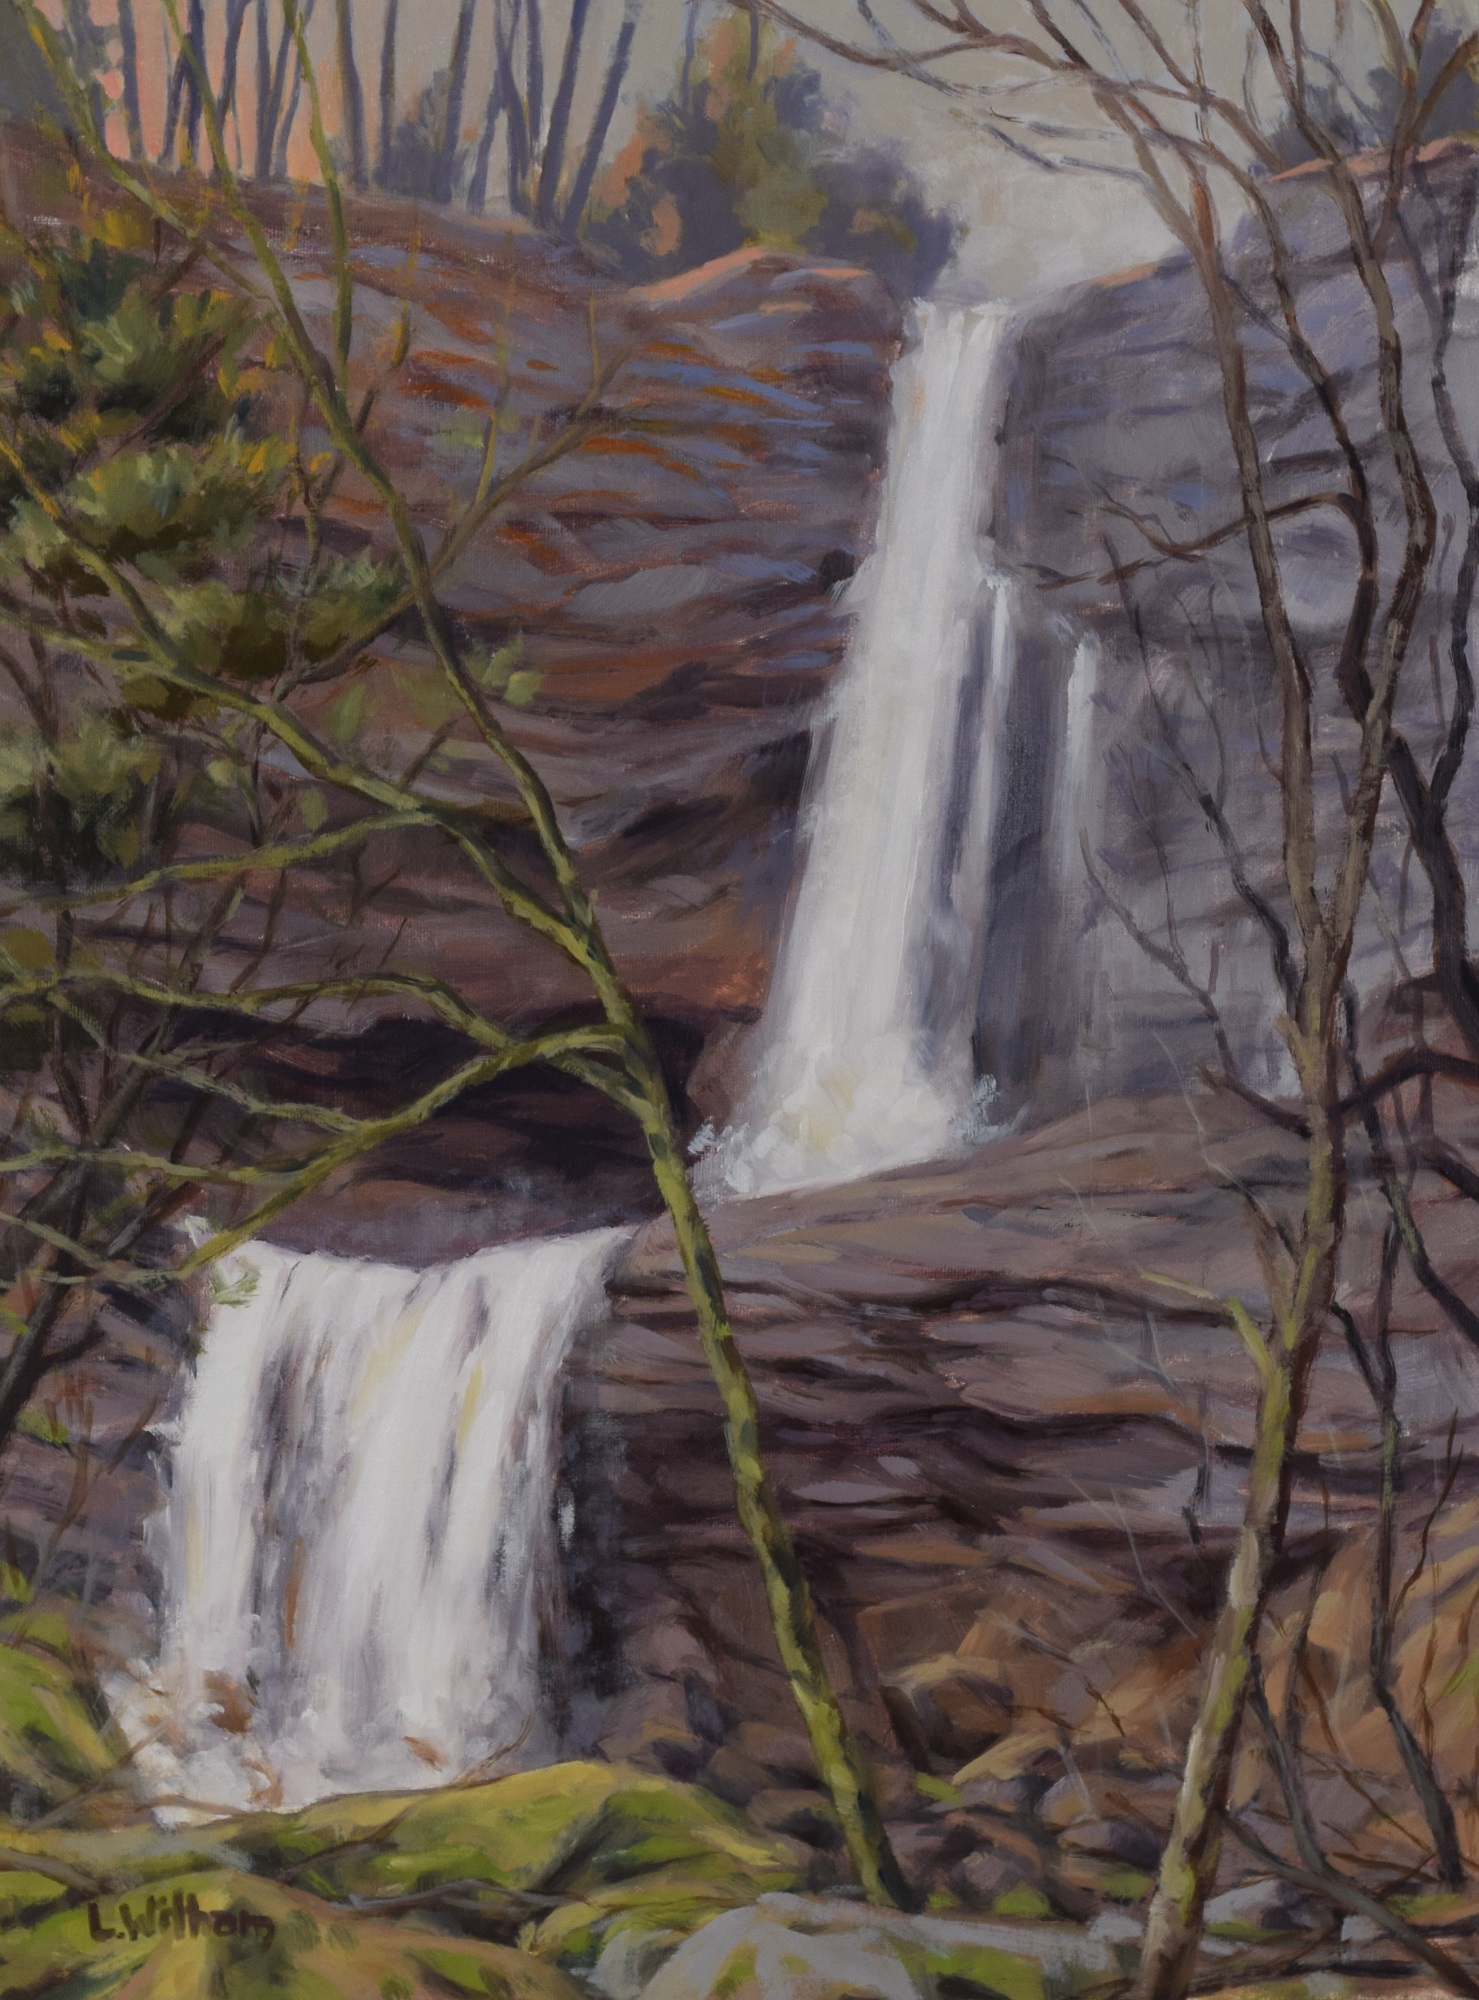 Kaaterskill Falls, Oil on linen, 12x16